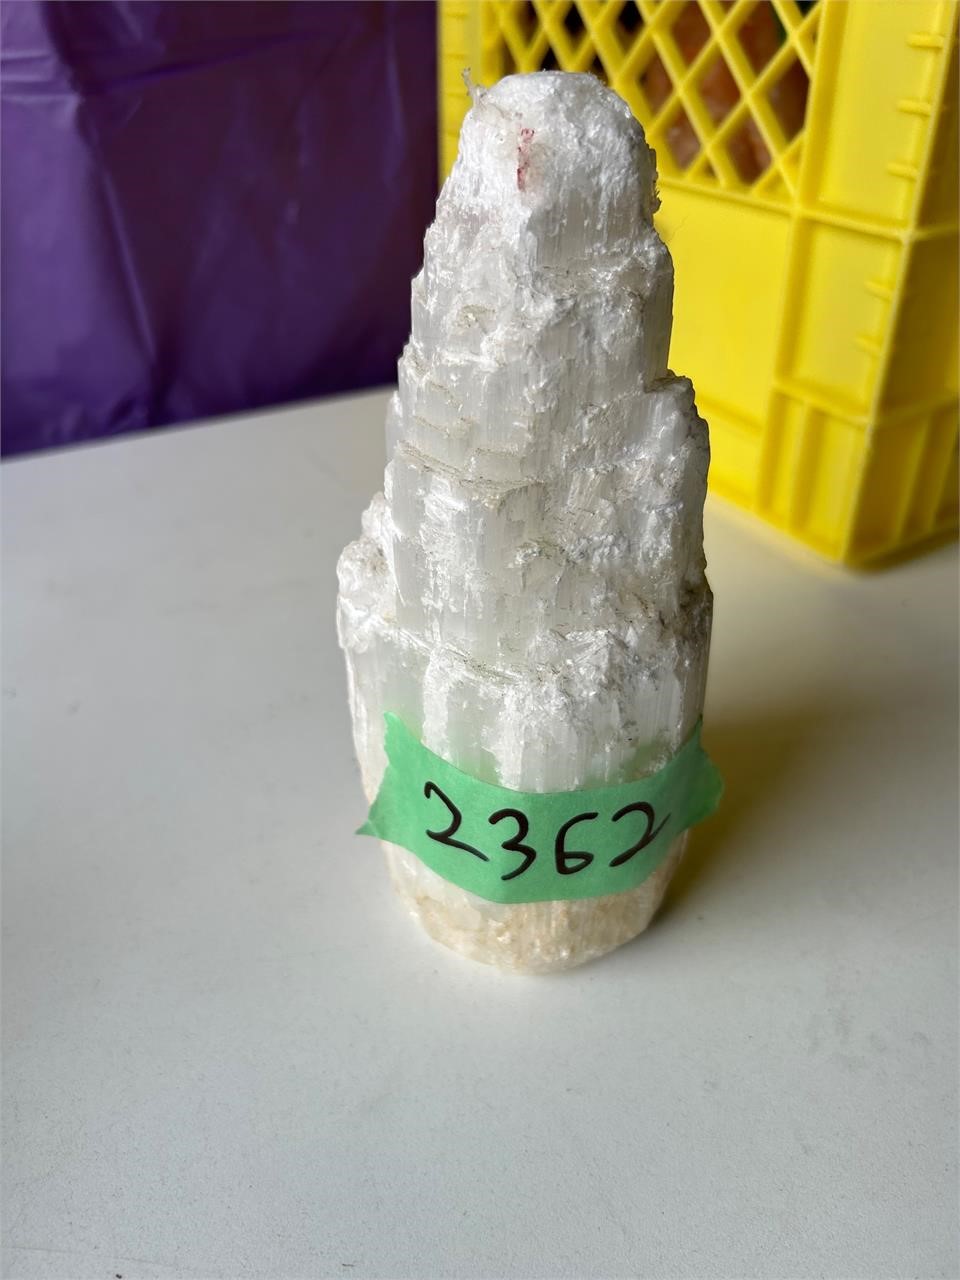 #2362 Large quartz crystal.